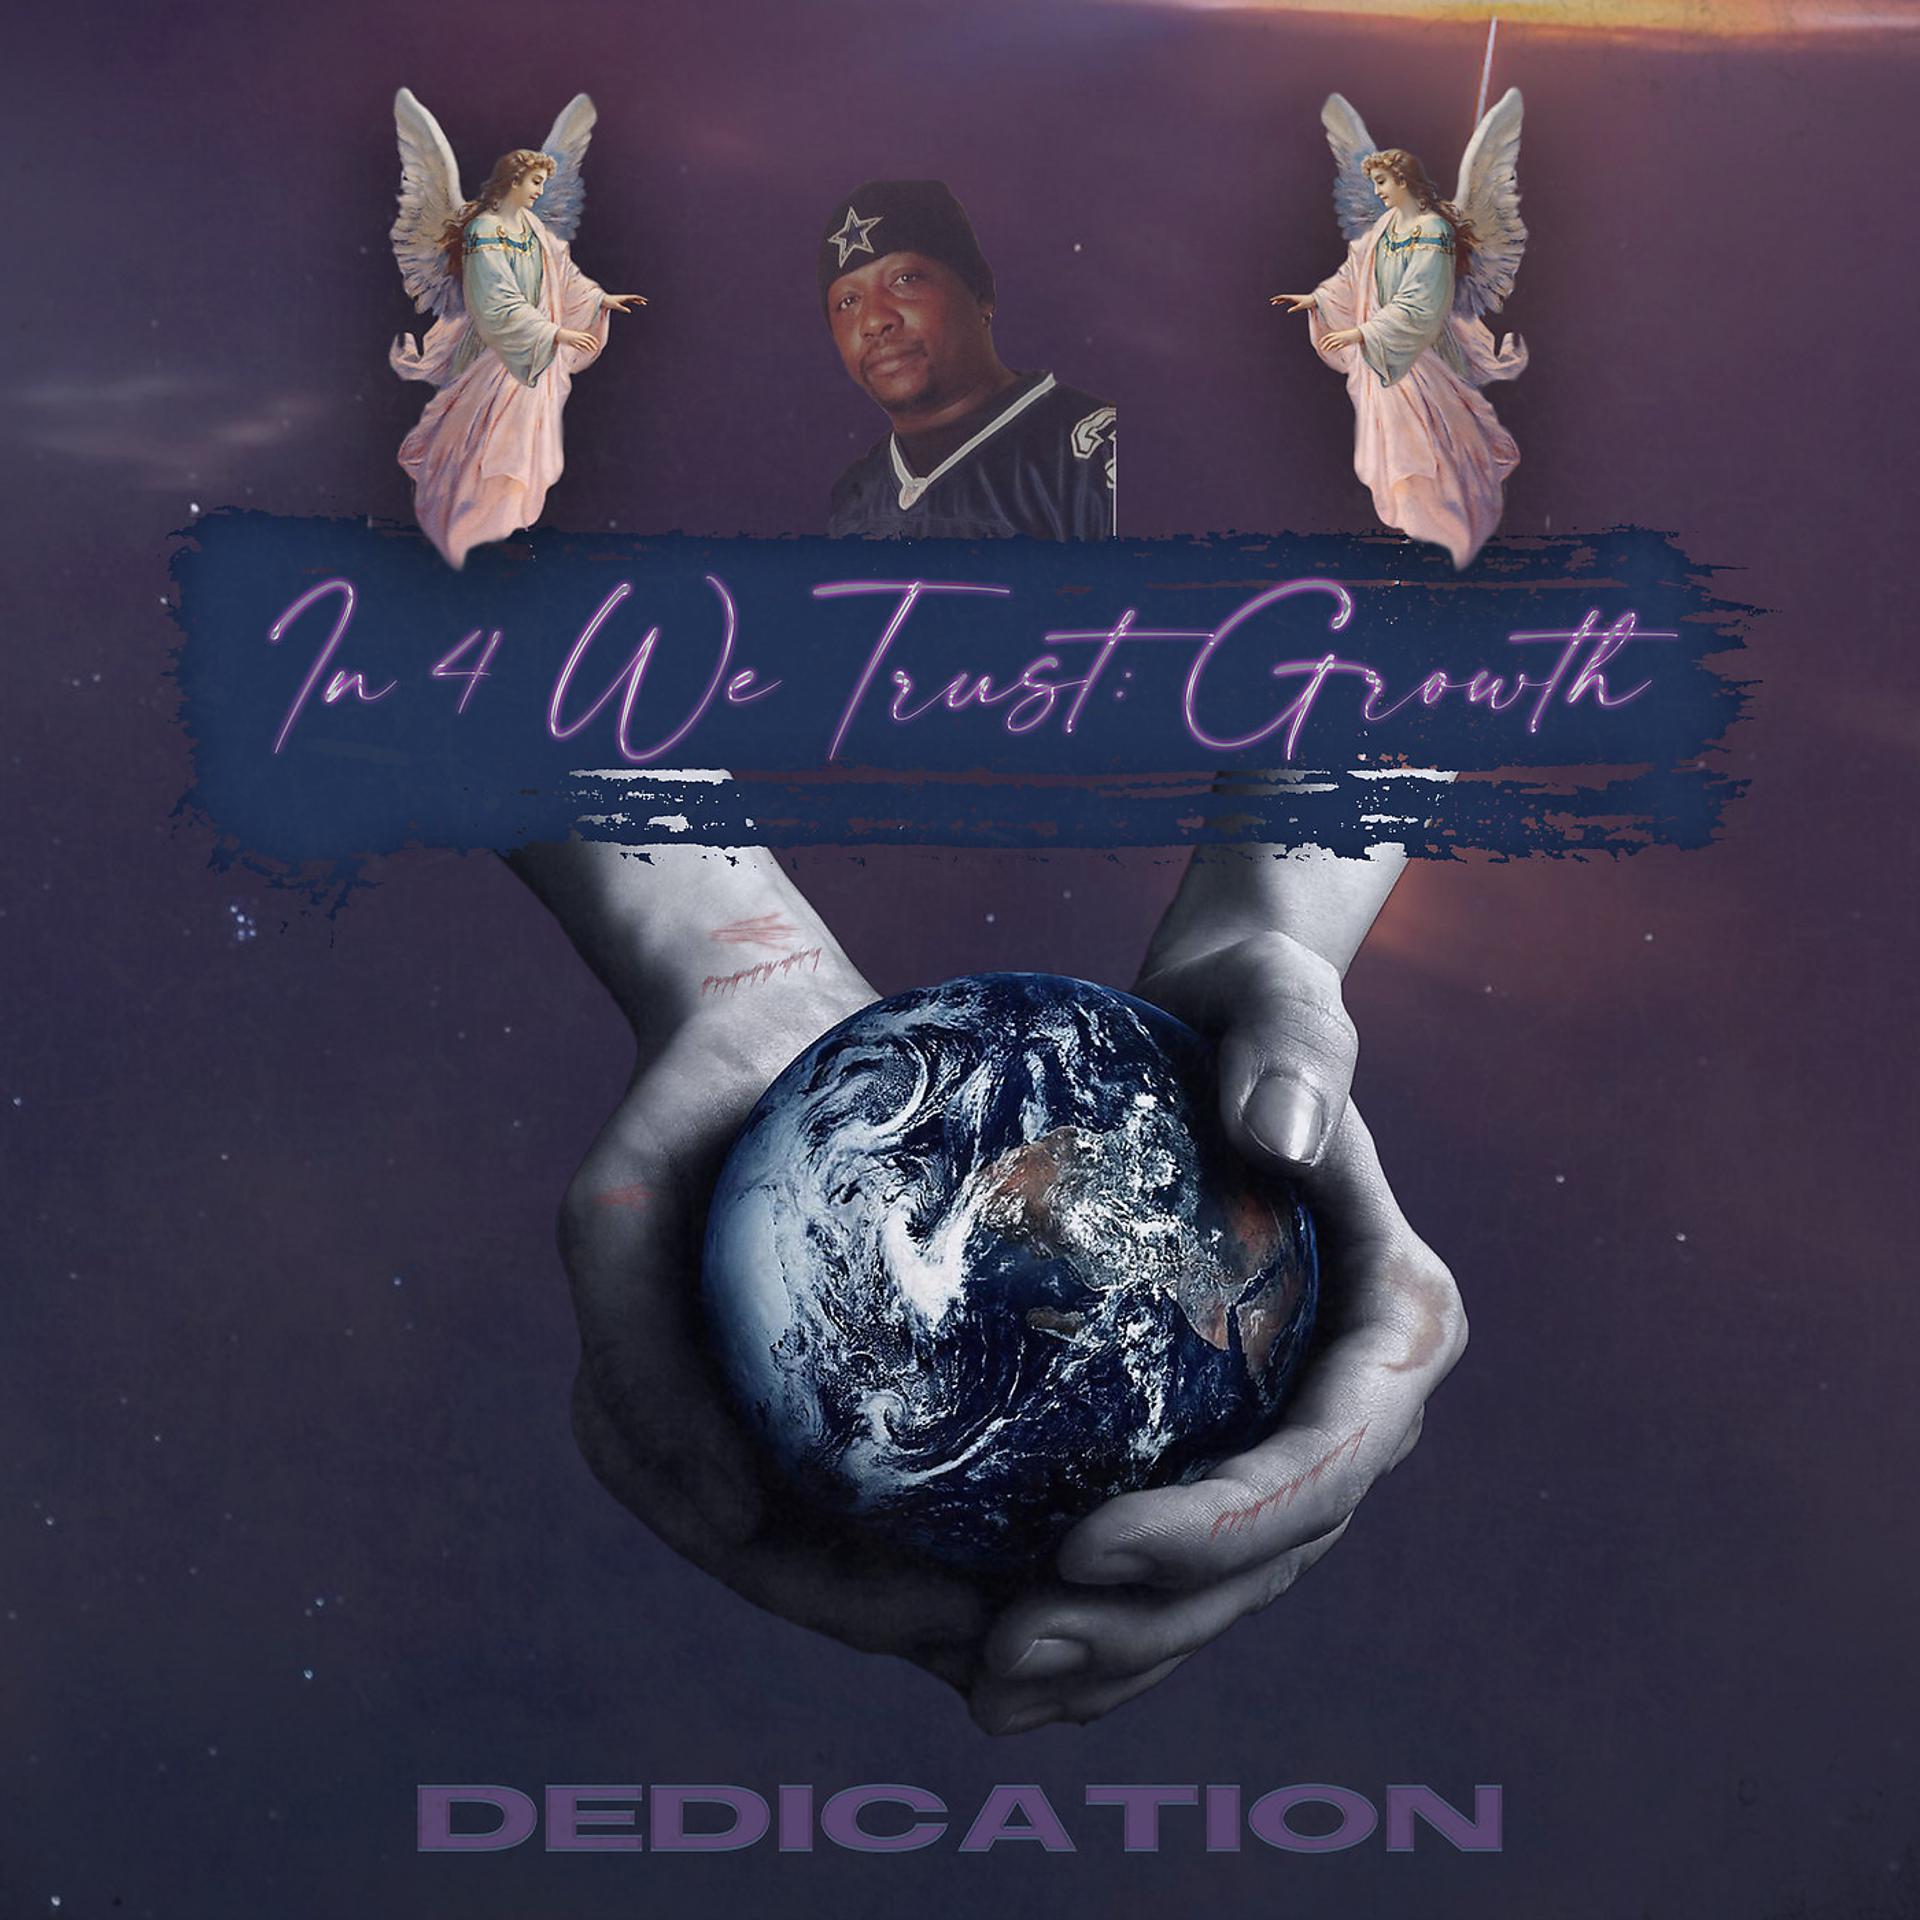 Постер альбома In 4 We Trust: Growth